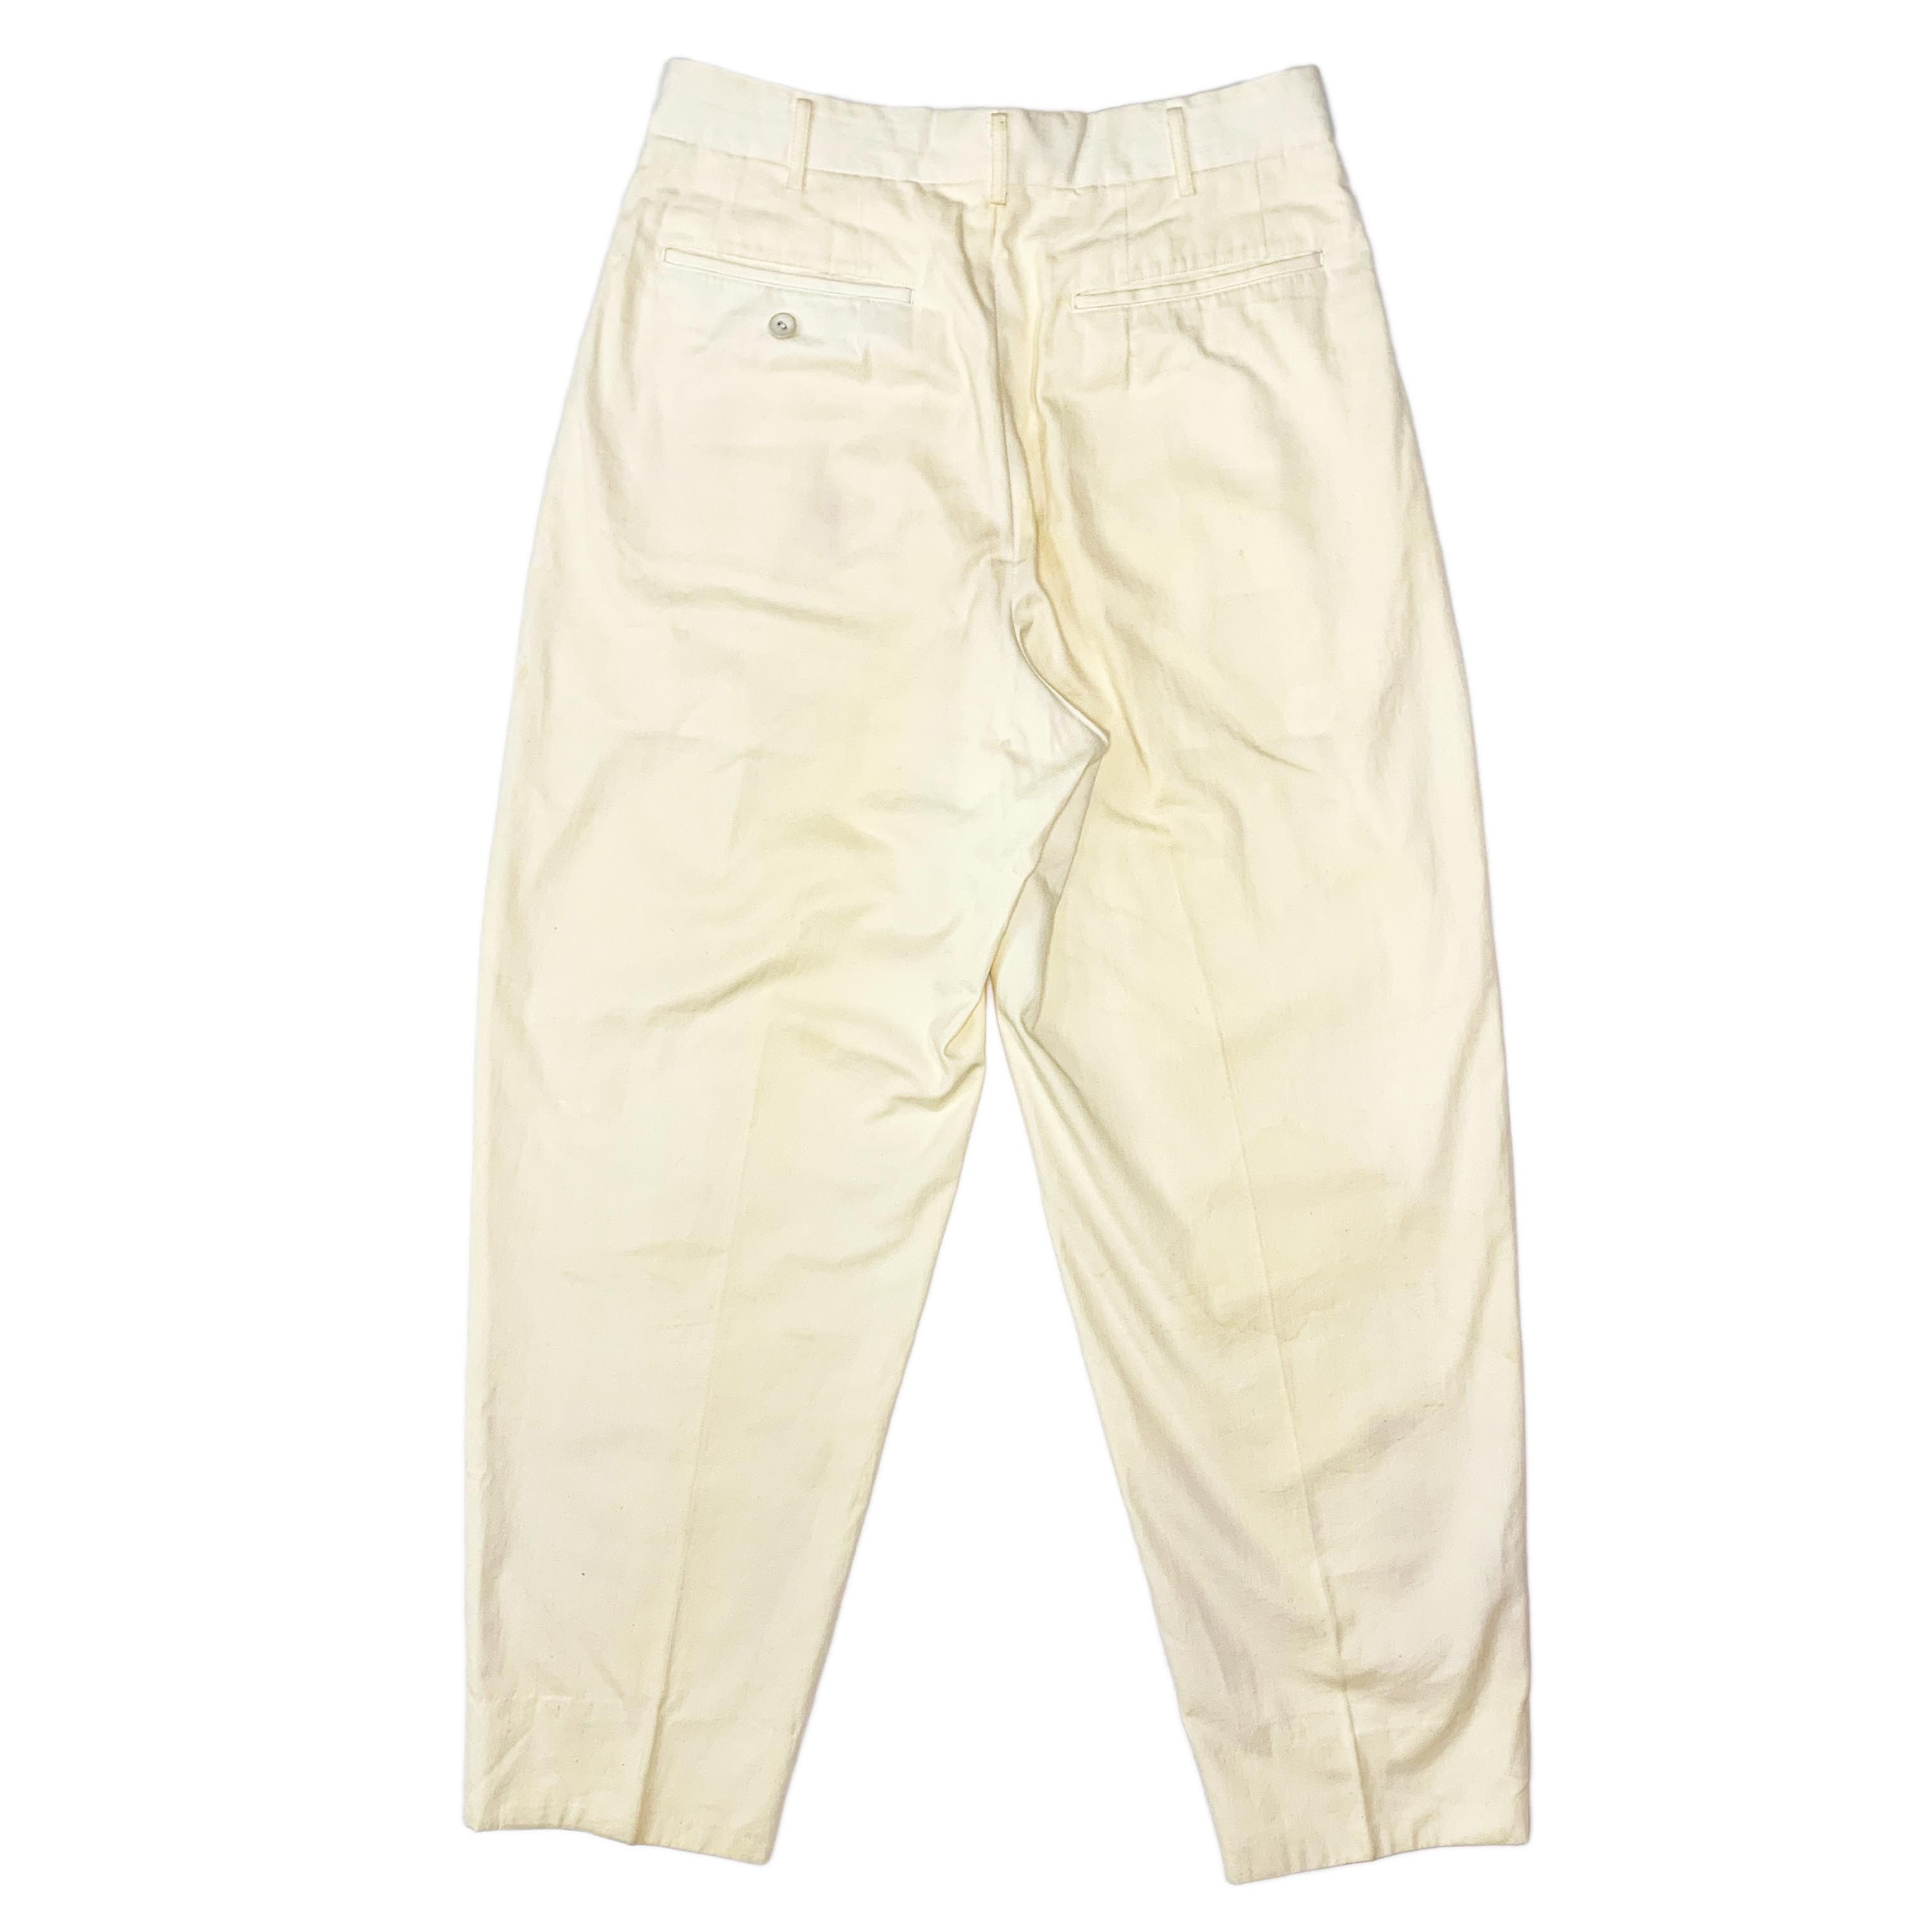 SS87 Cotton Pants - 3